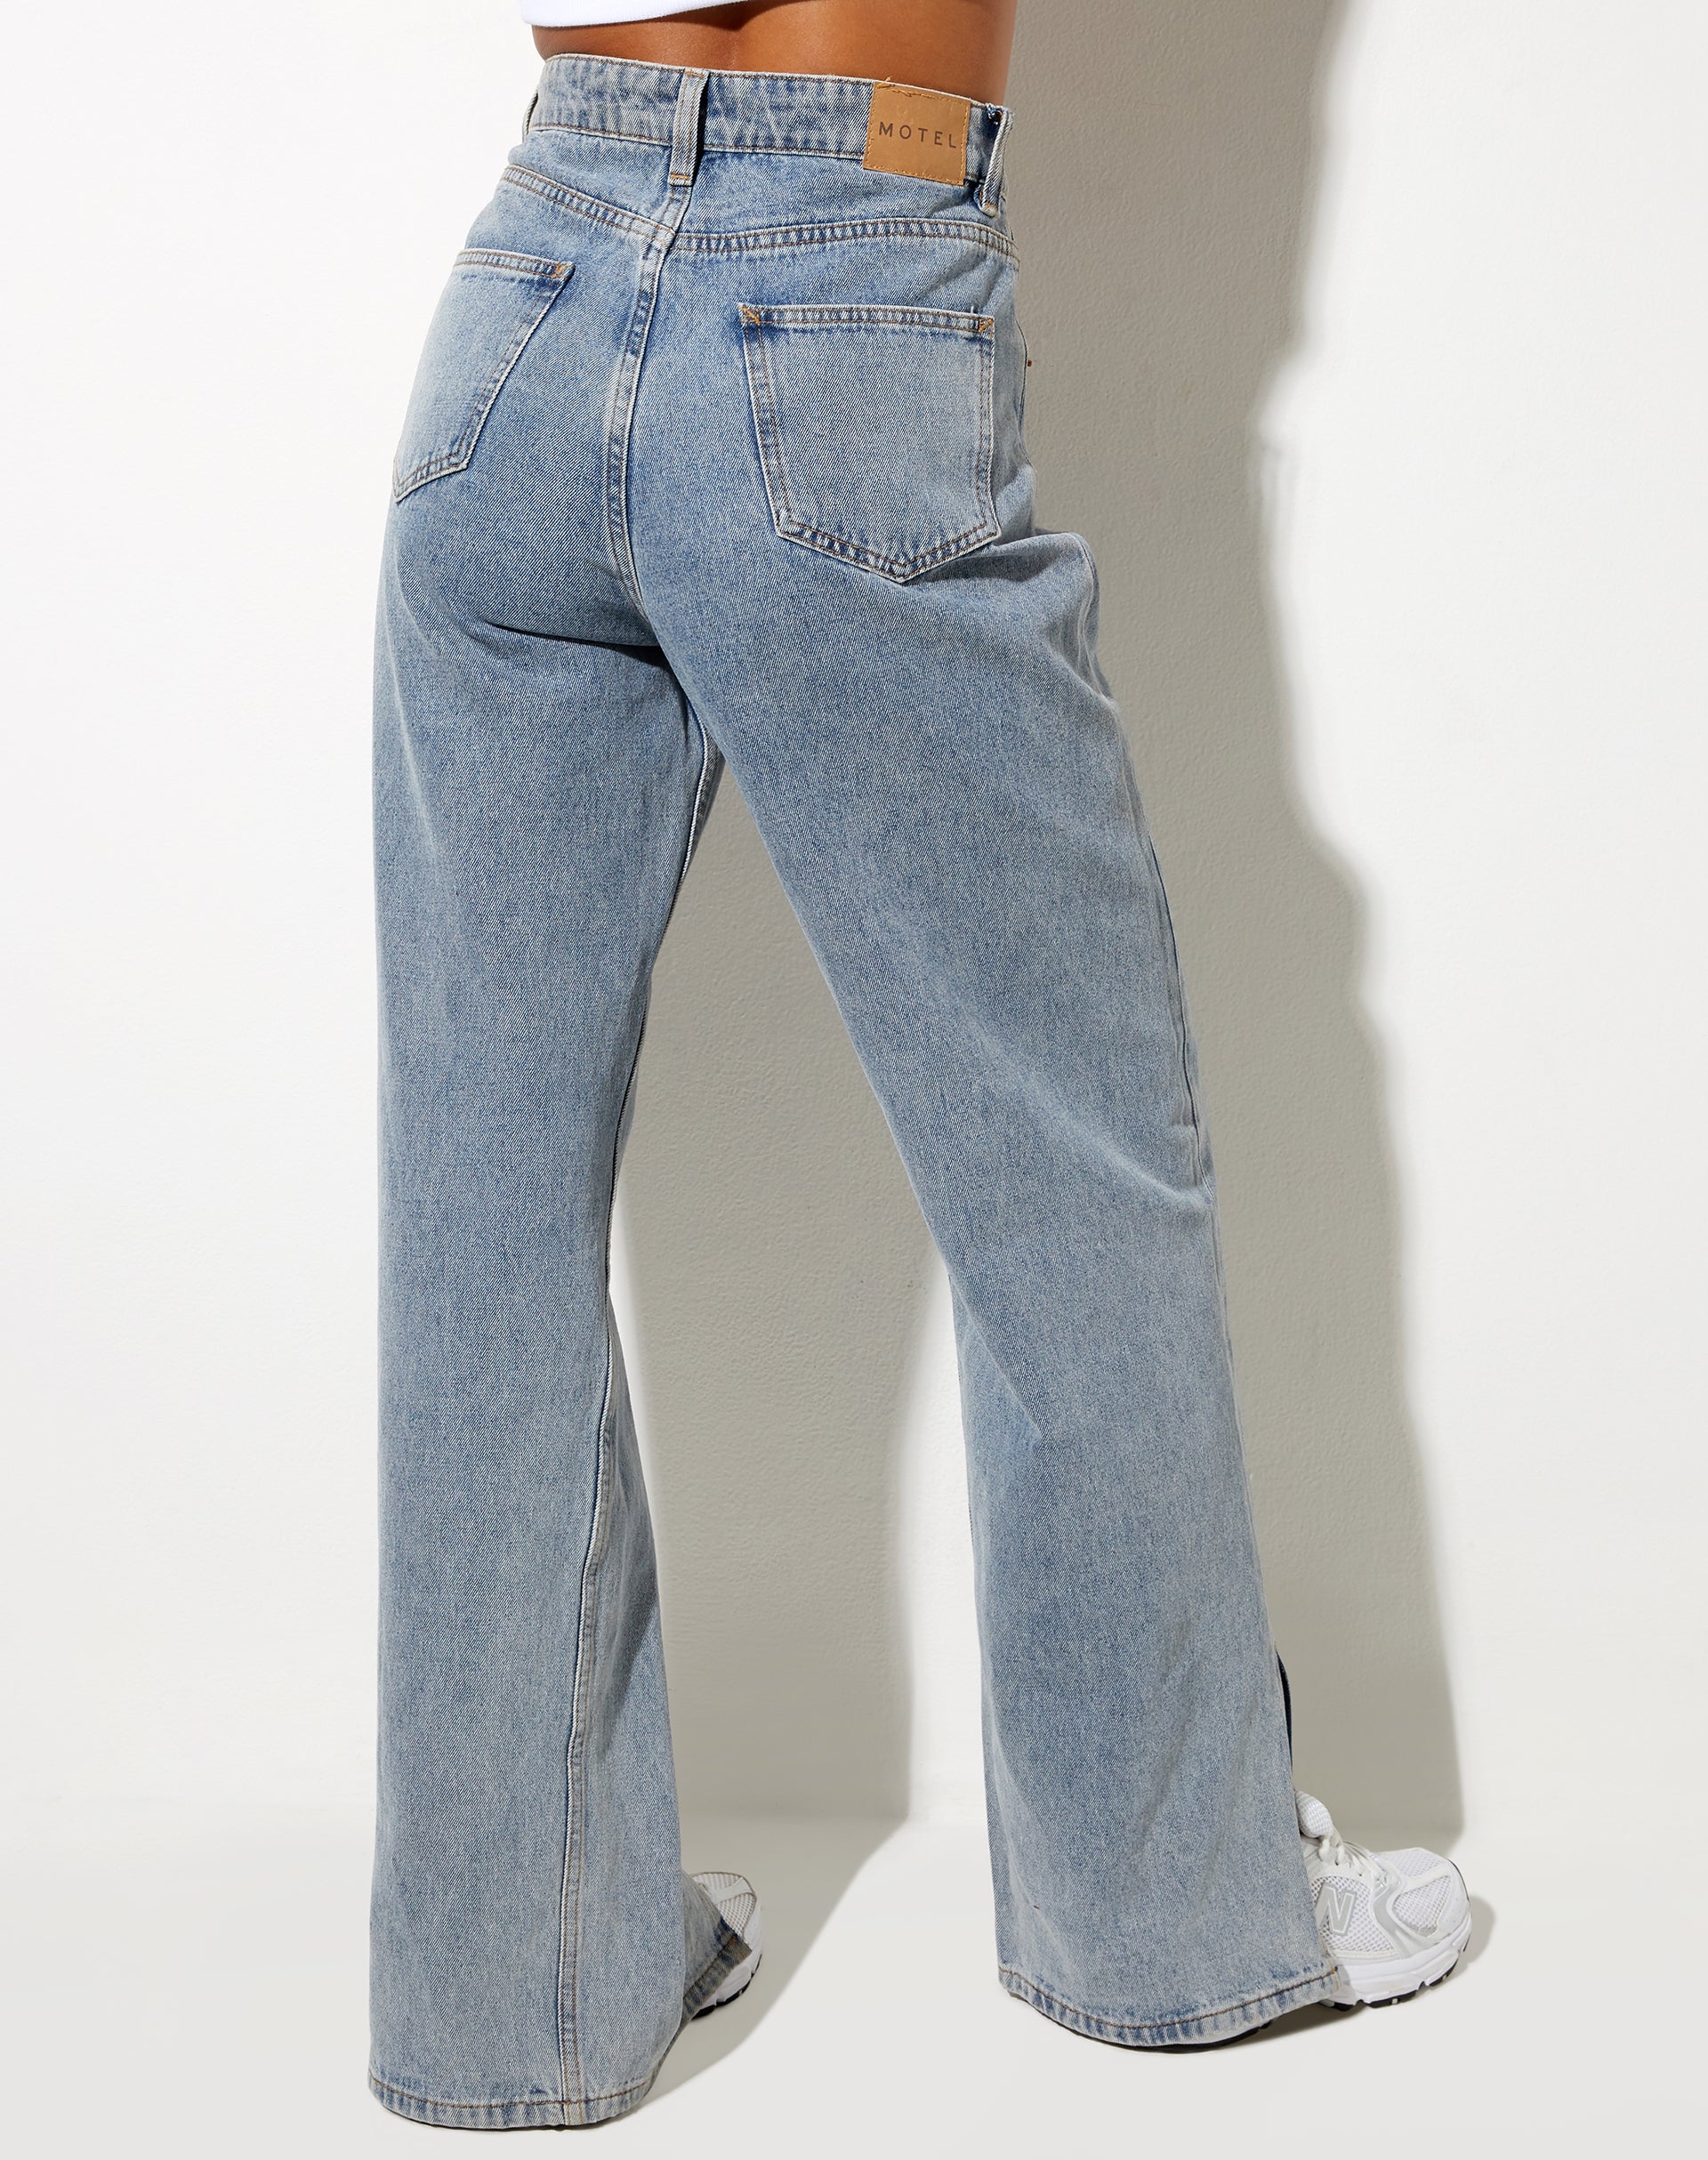 Image of Split Parallel Jeans in Light Blue Wash